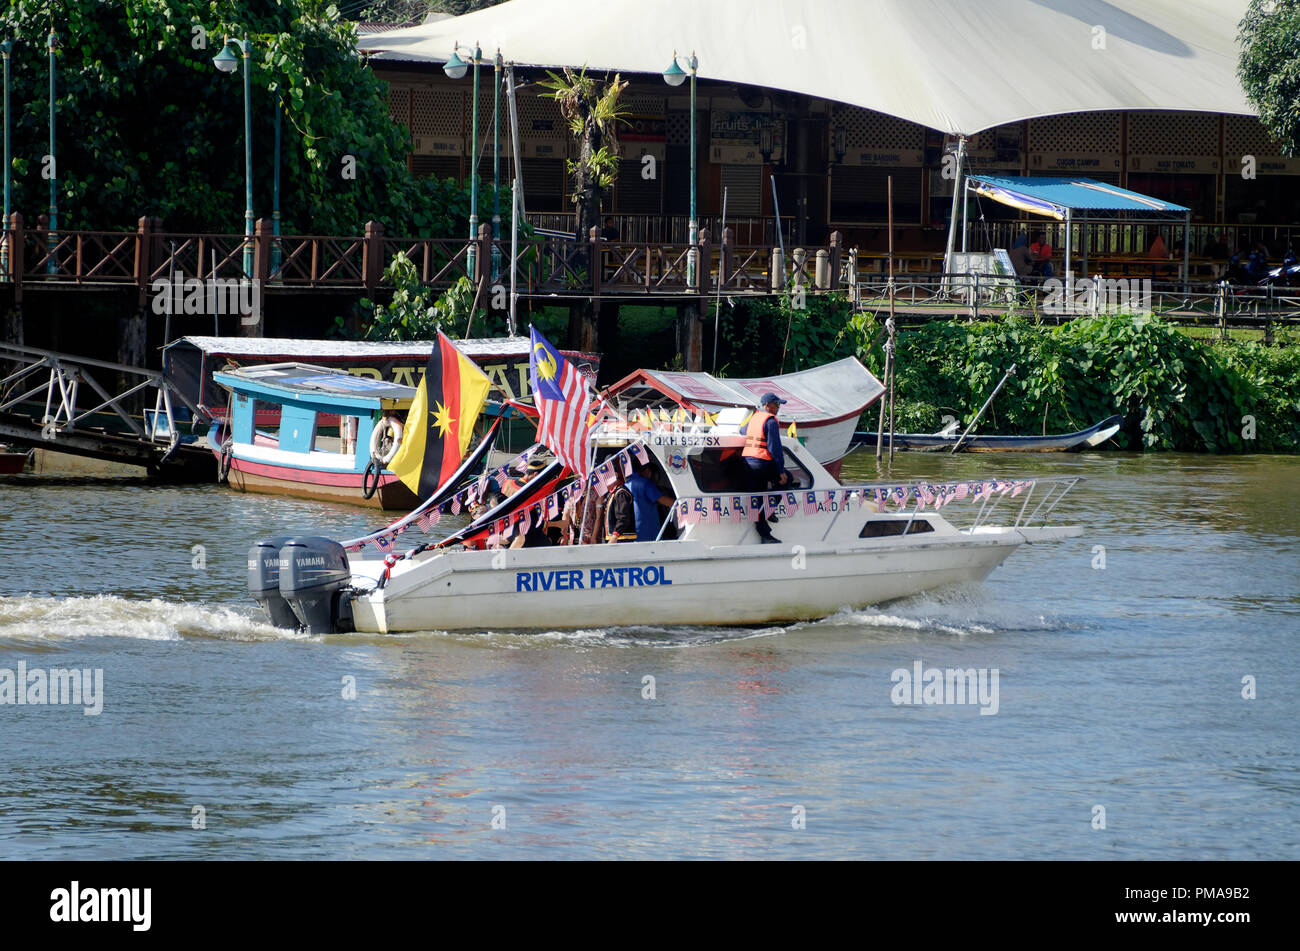 River patrol boat on the Sarak Rivr carrying Sarawak and Malaysian flags in KUching, Gawai regatta and festival, Borneo Stock Photo